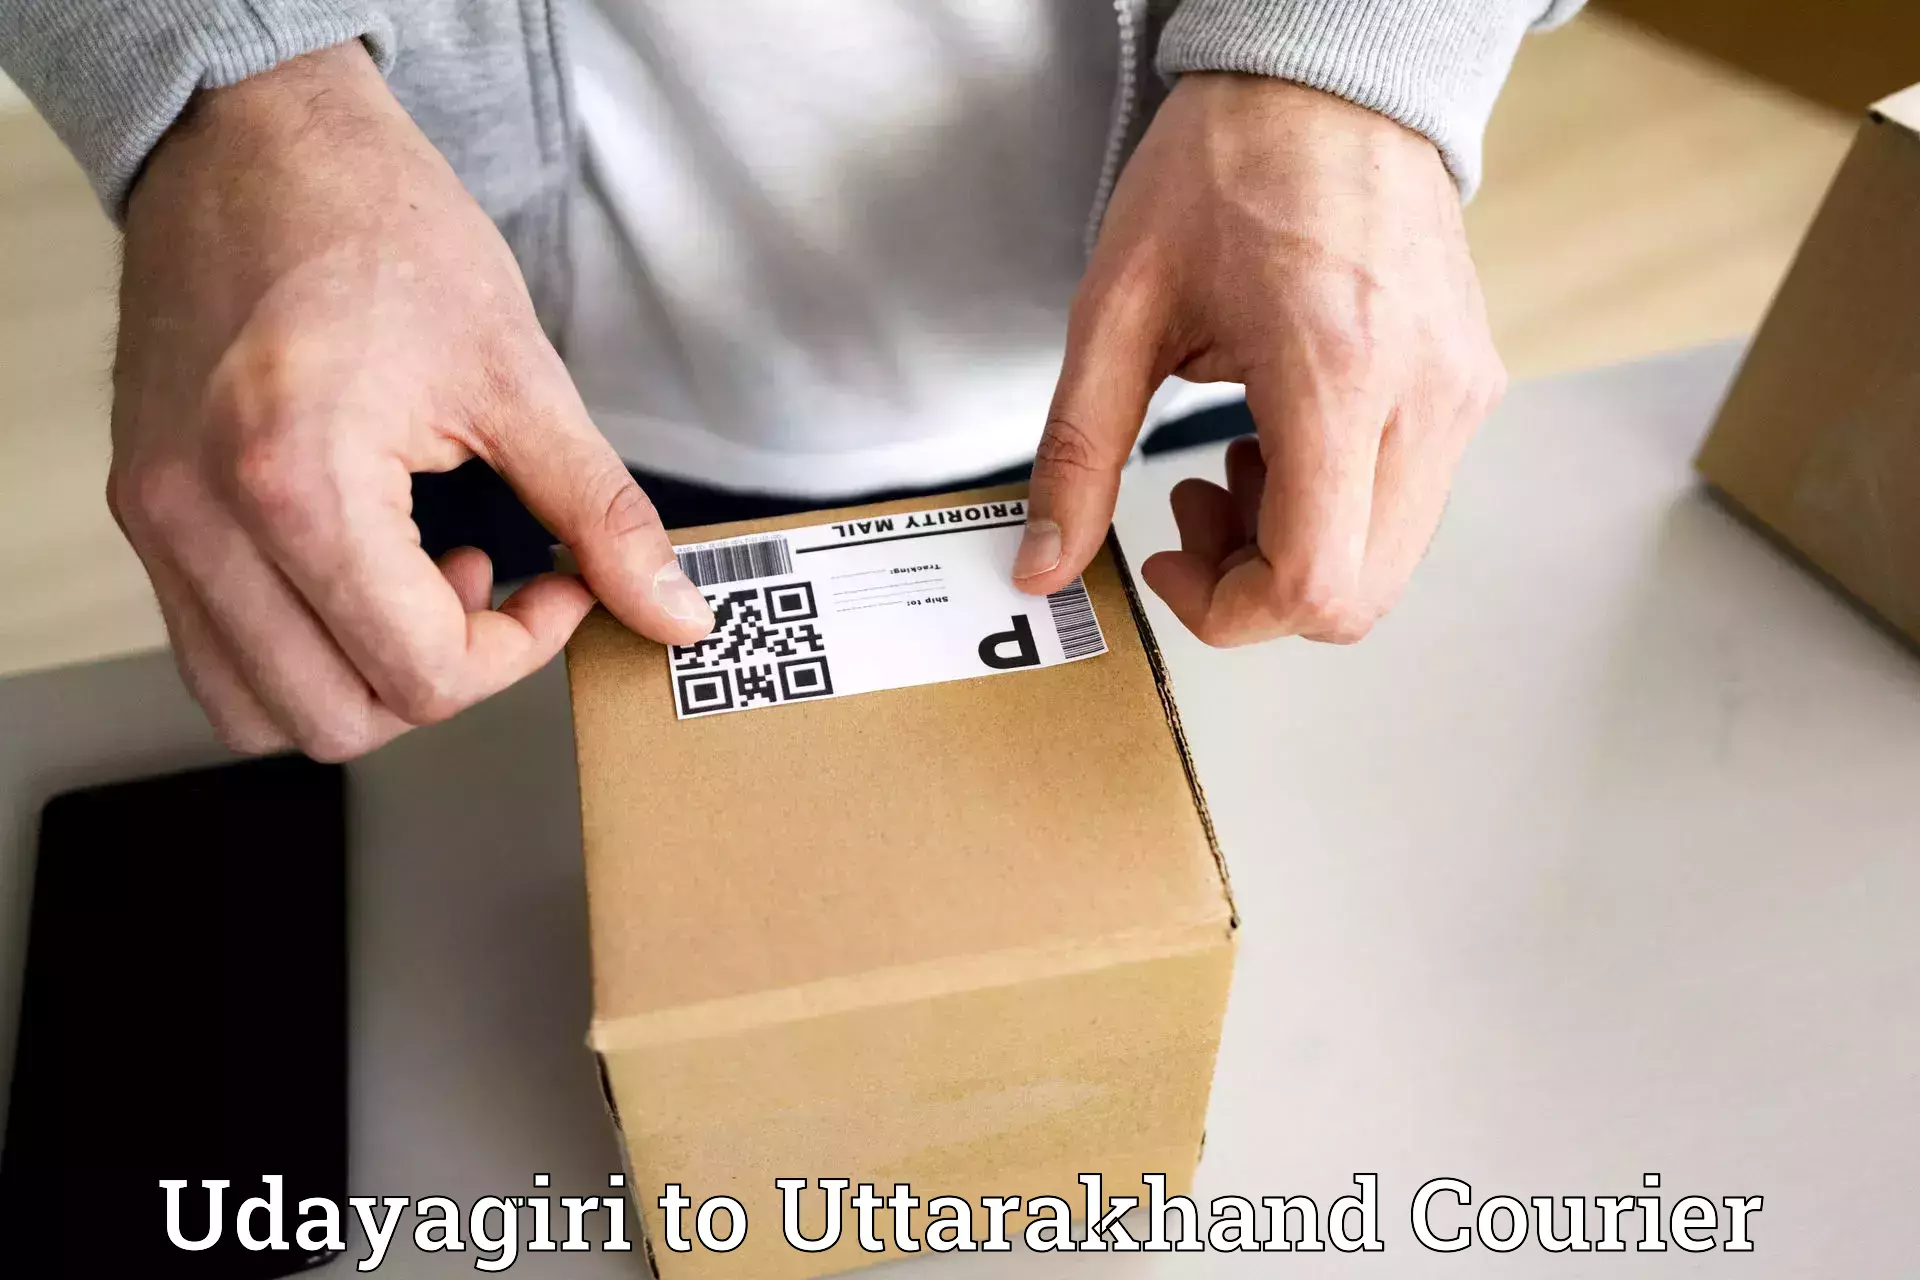 Effective logistics strategies Udayagiri to Rishikesh